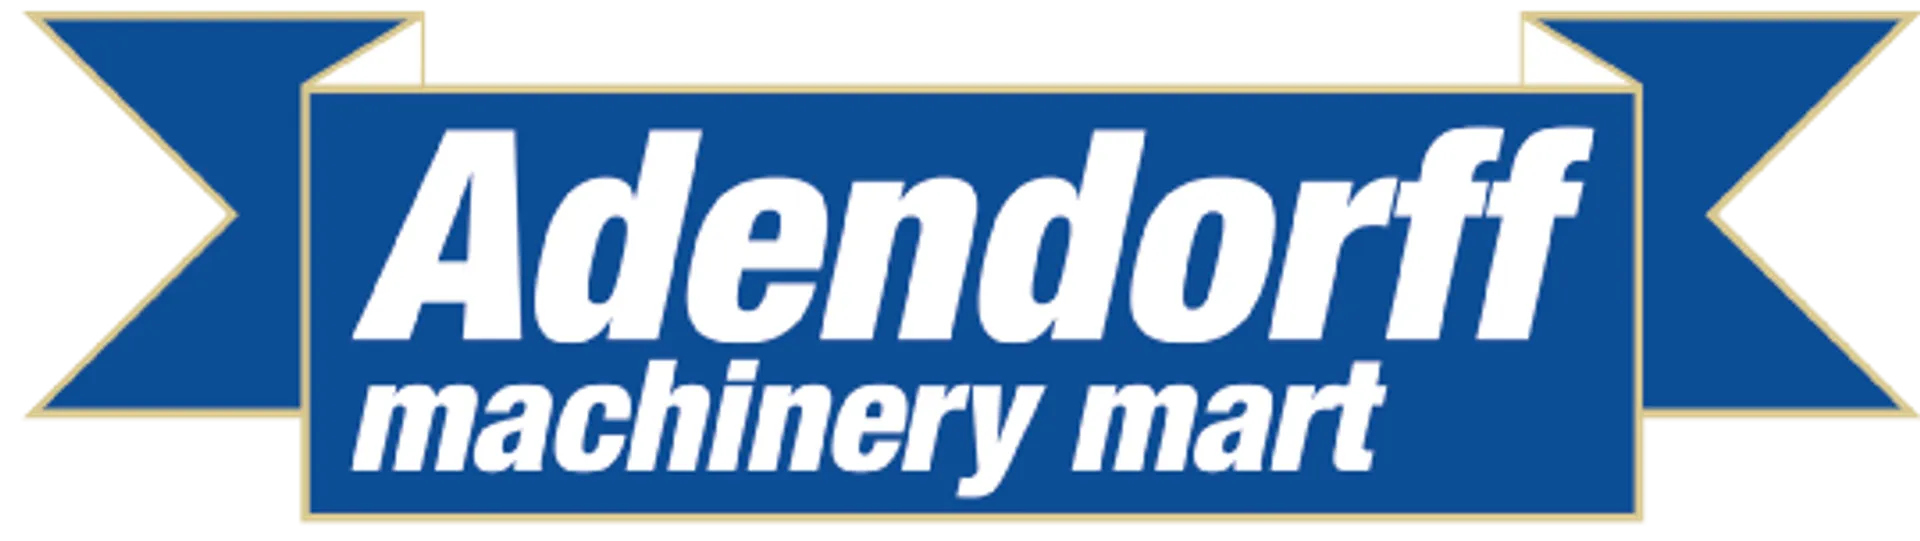 ADENDORFF MACHINERY MART logo. Current weekly ad